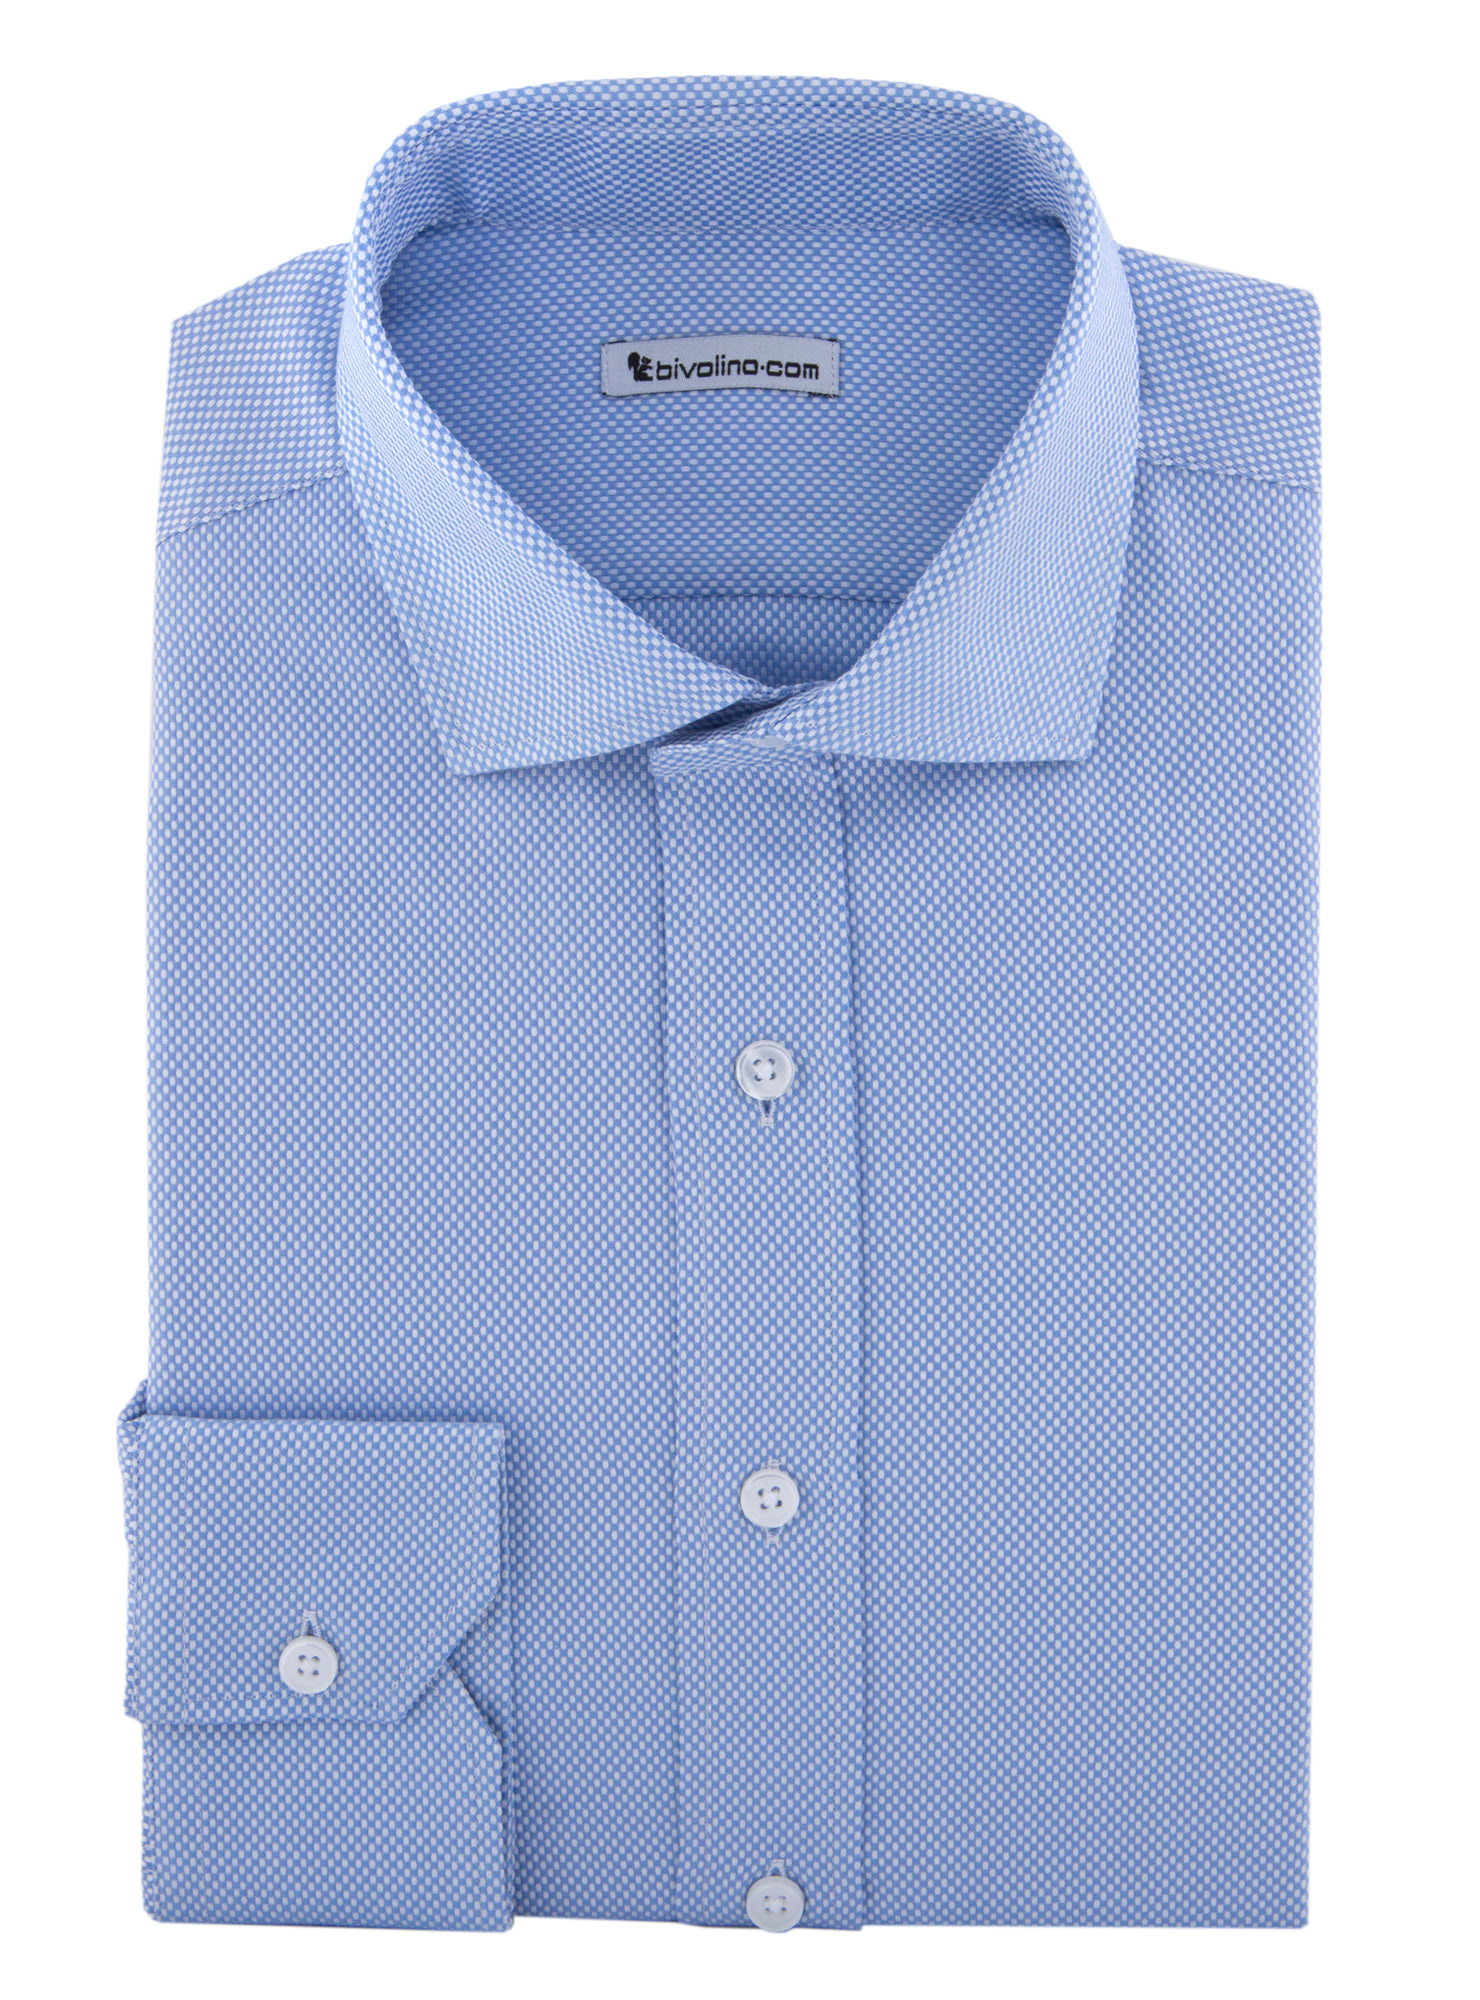 SAREGO - Camisa oxford dobby azul real - BEDFORD 2